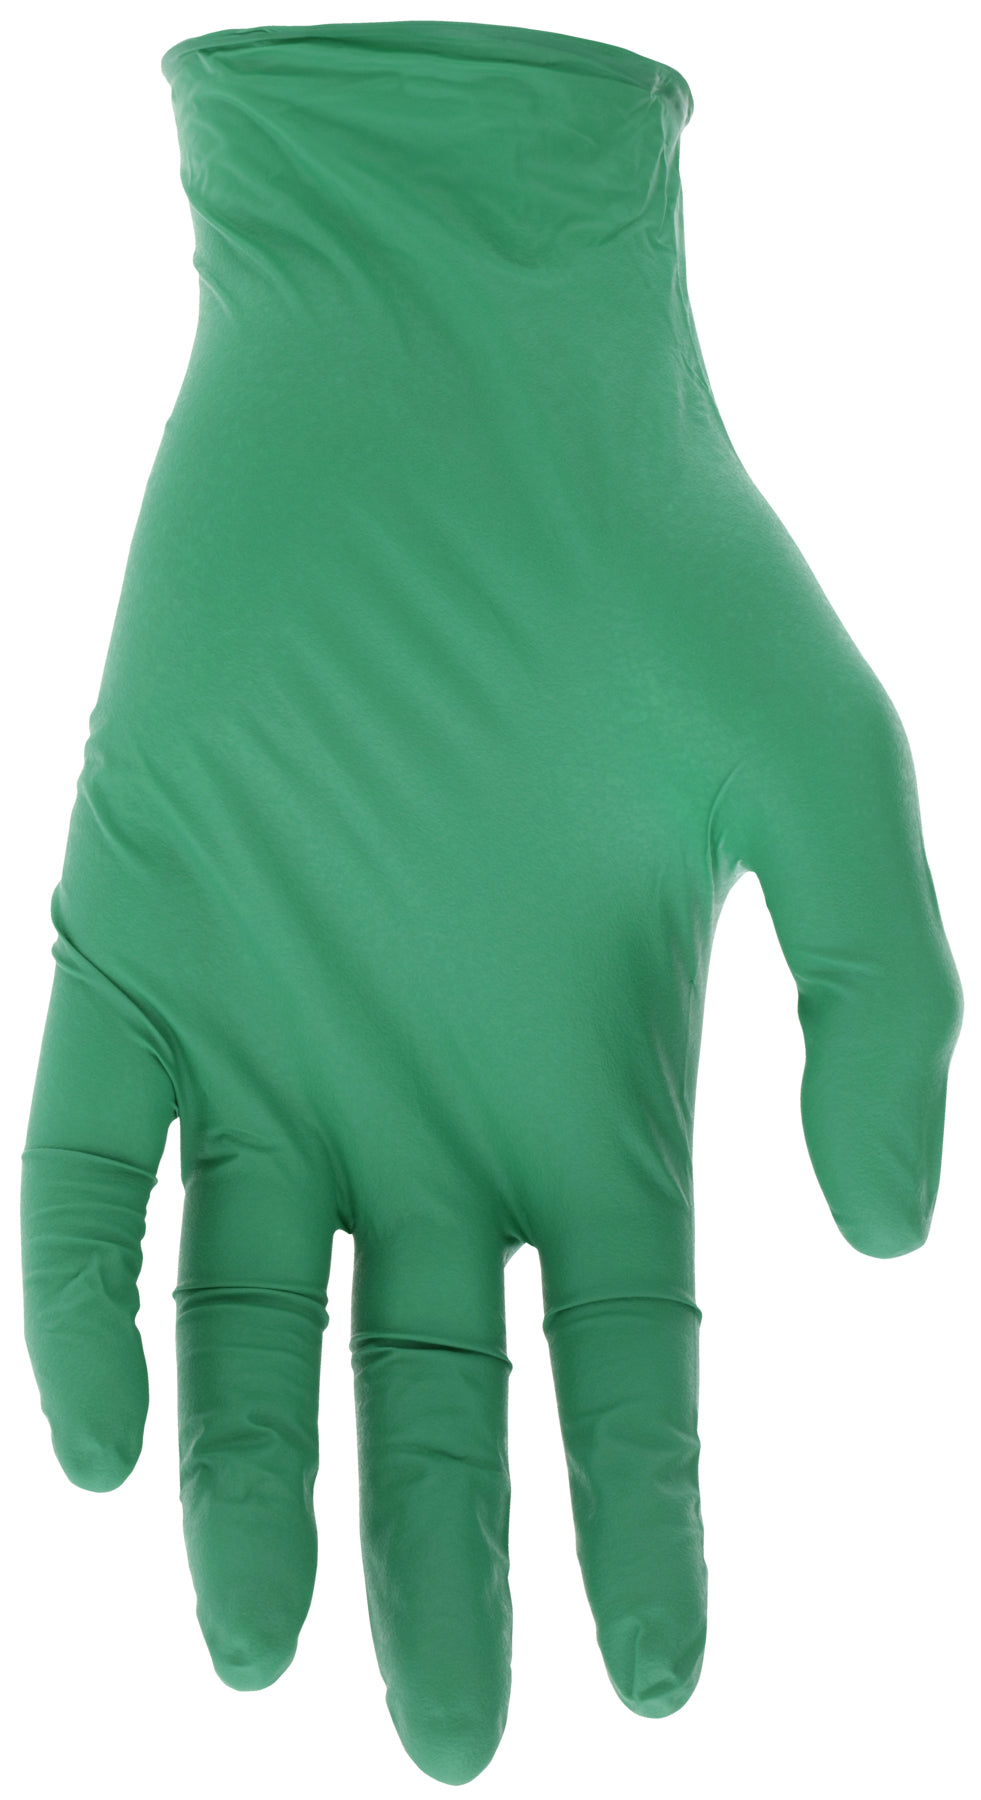 6041 -4 Mil NitriShield™ Disposable Nitrile Gloves Biodegradable